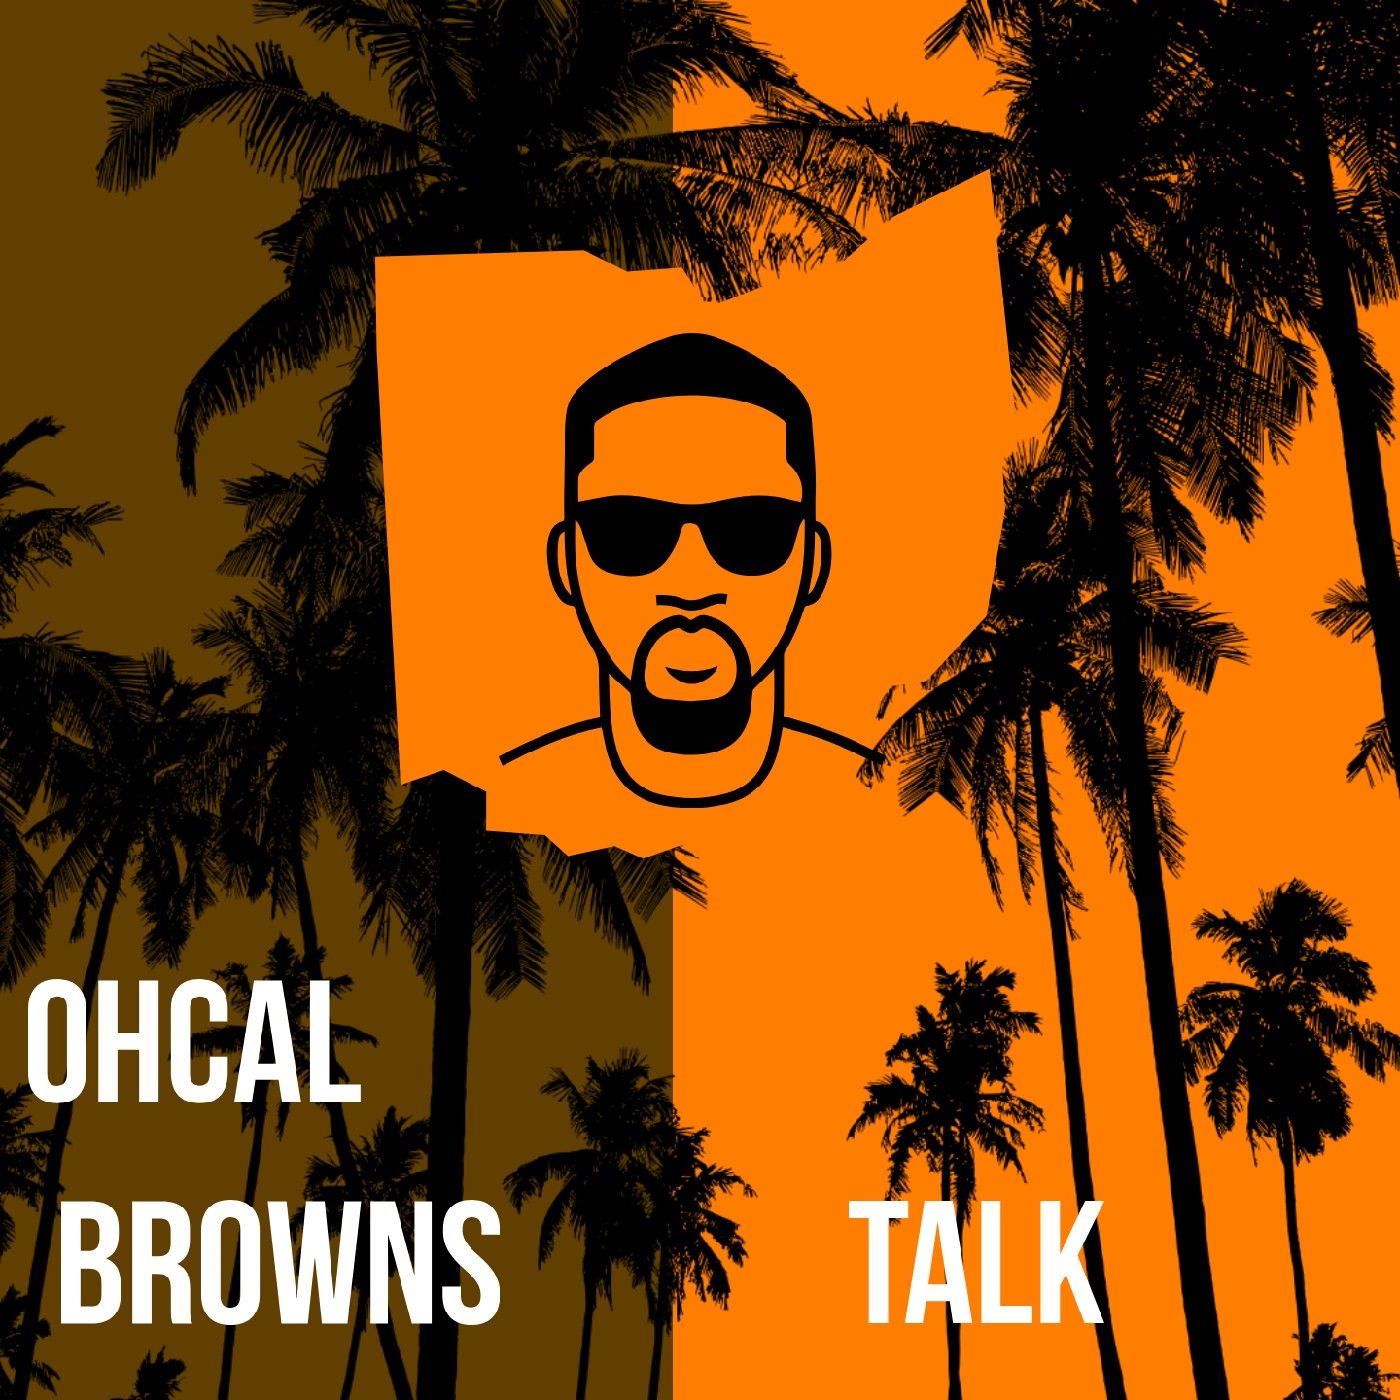 OHCal BROWNS TALK